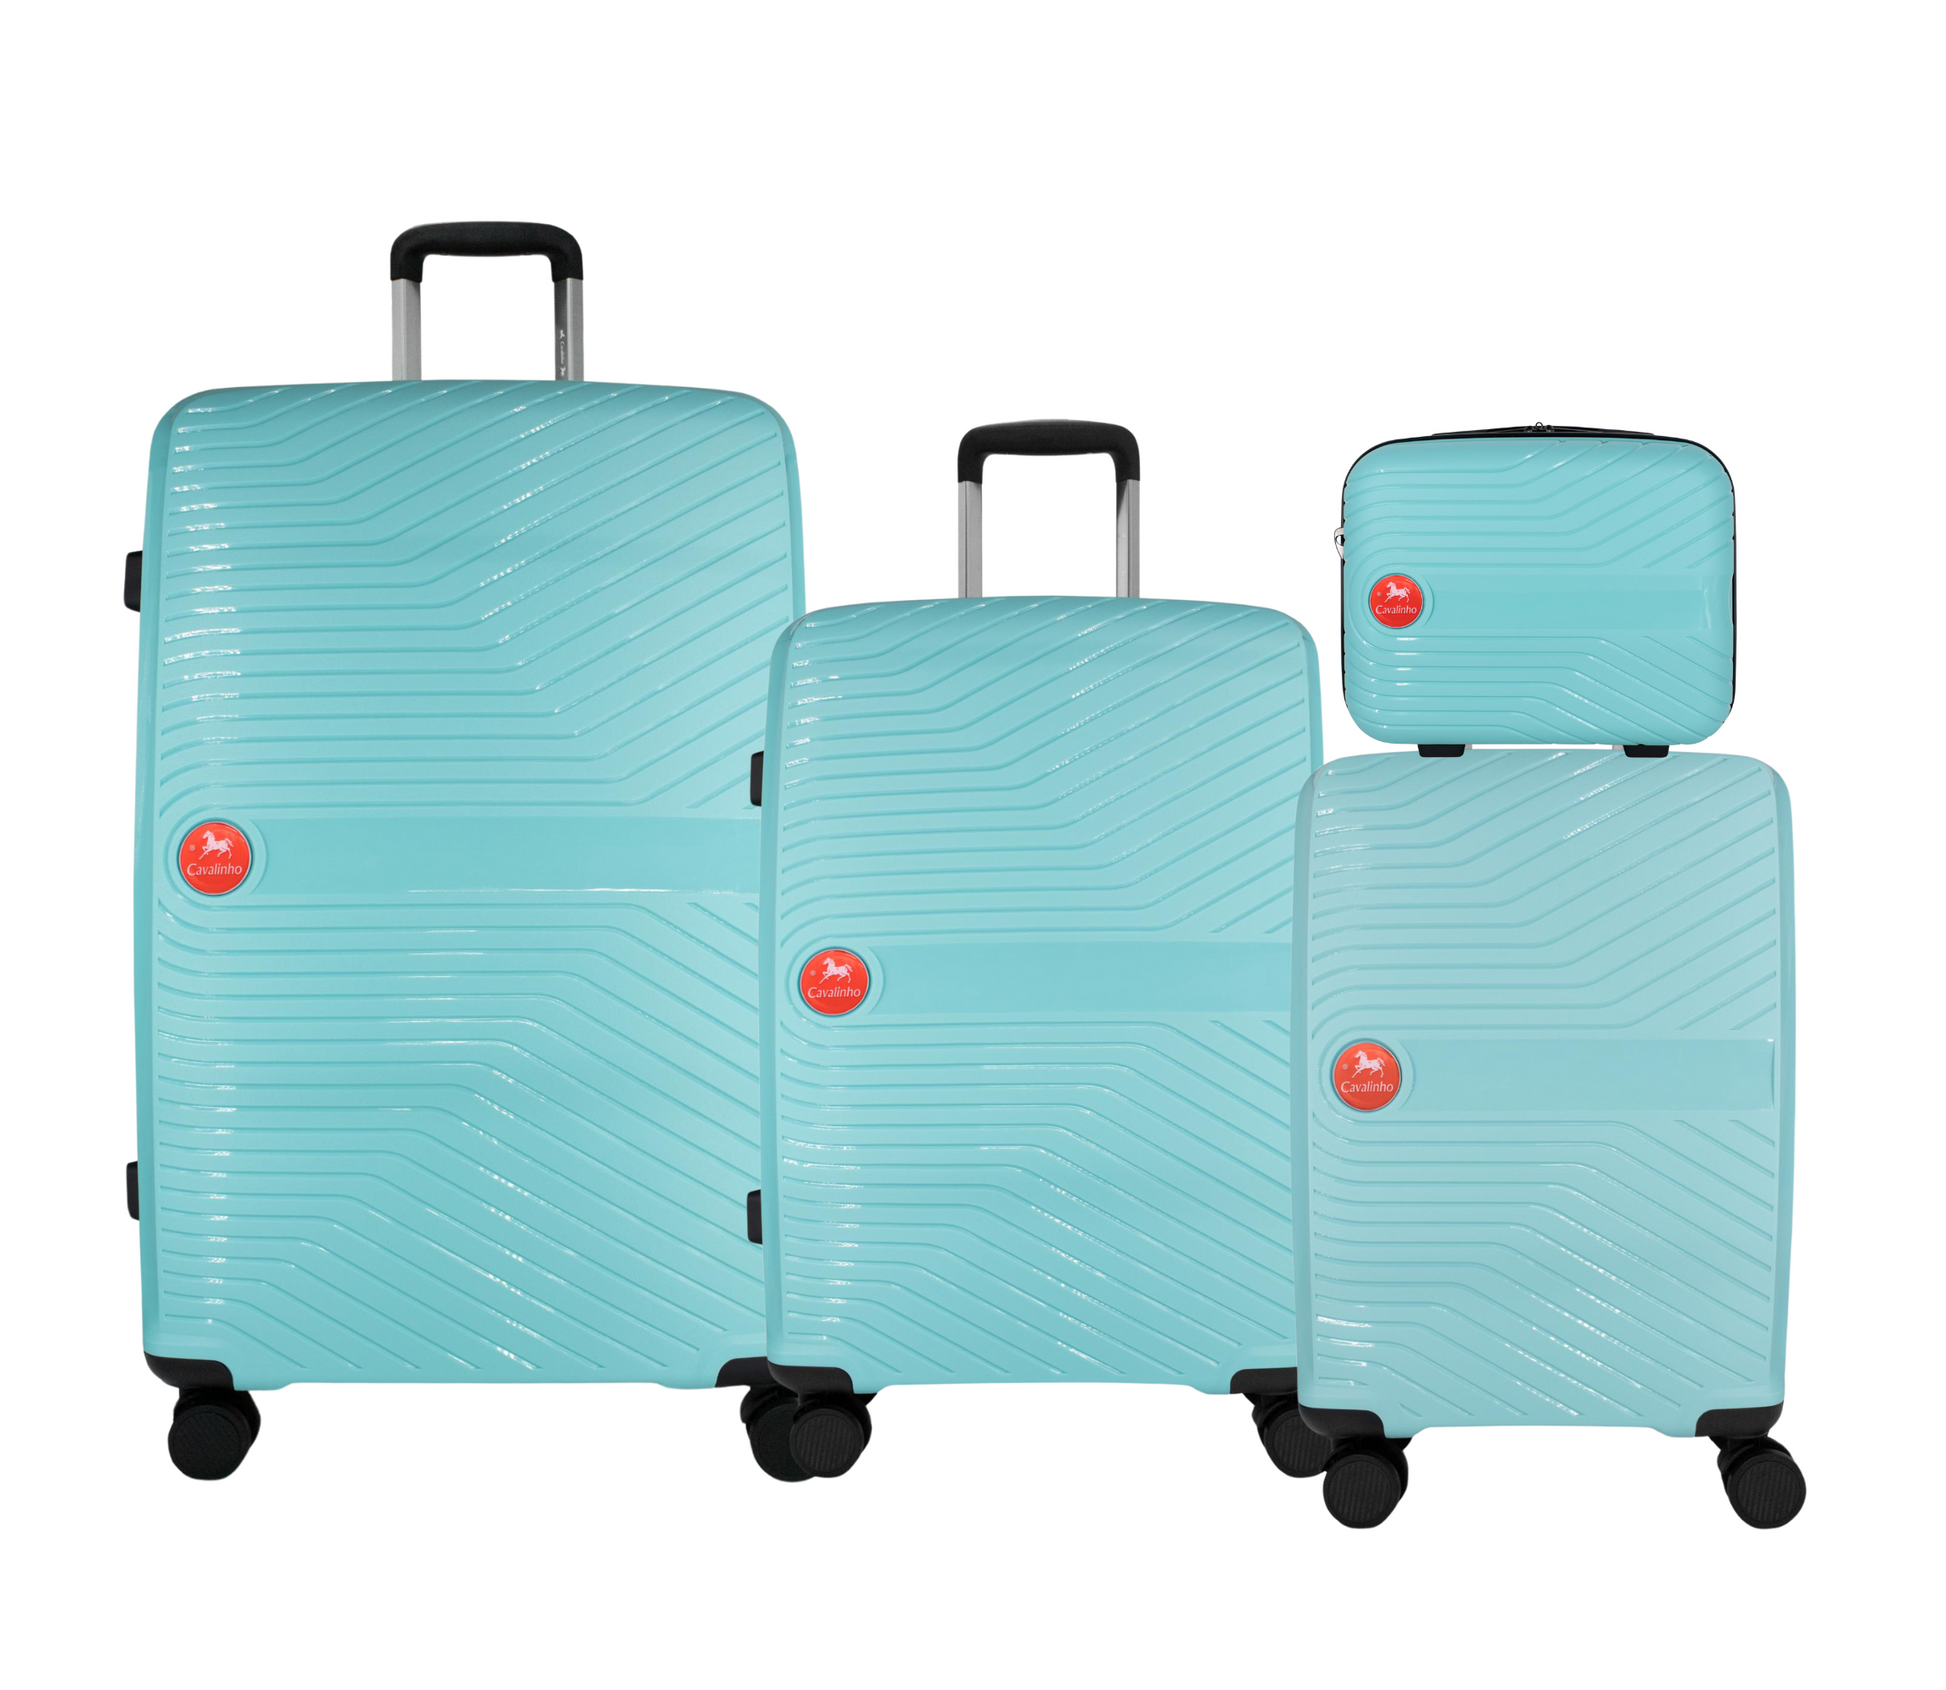 Cavalinho Canada & USA 4 Piece Set of Colorful Hardside Luggage (15", 19", 24", 28") - LightBlue - 68020004.10.S4_1